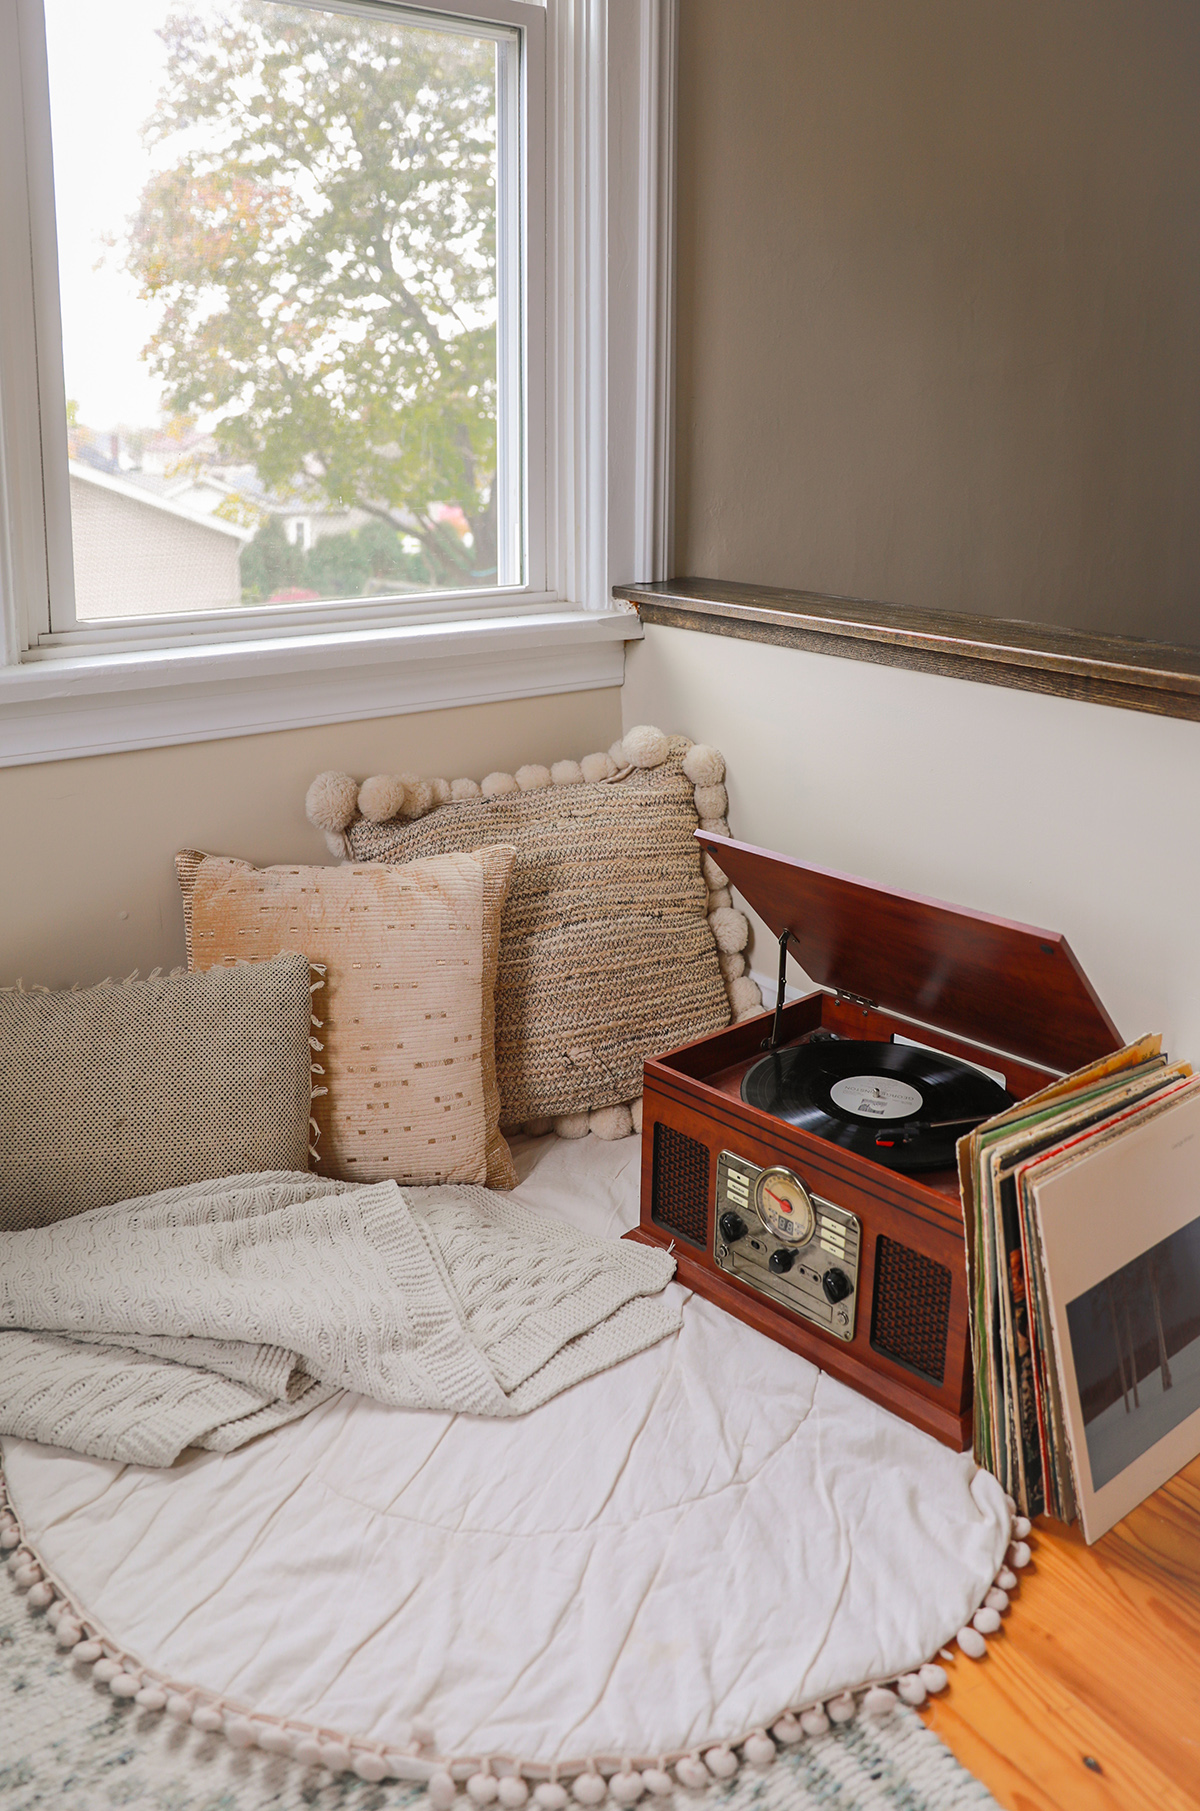 music corner - vintage record player